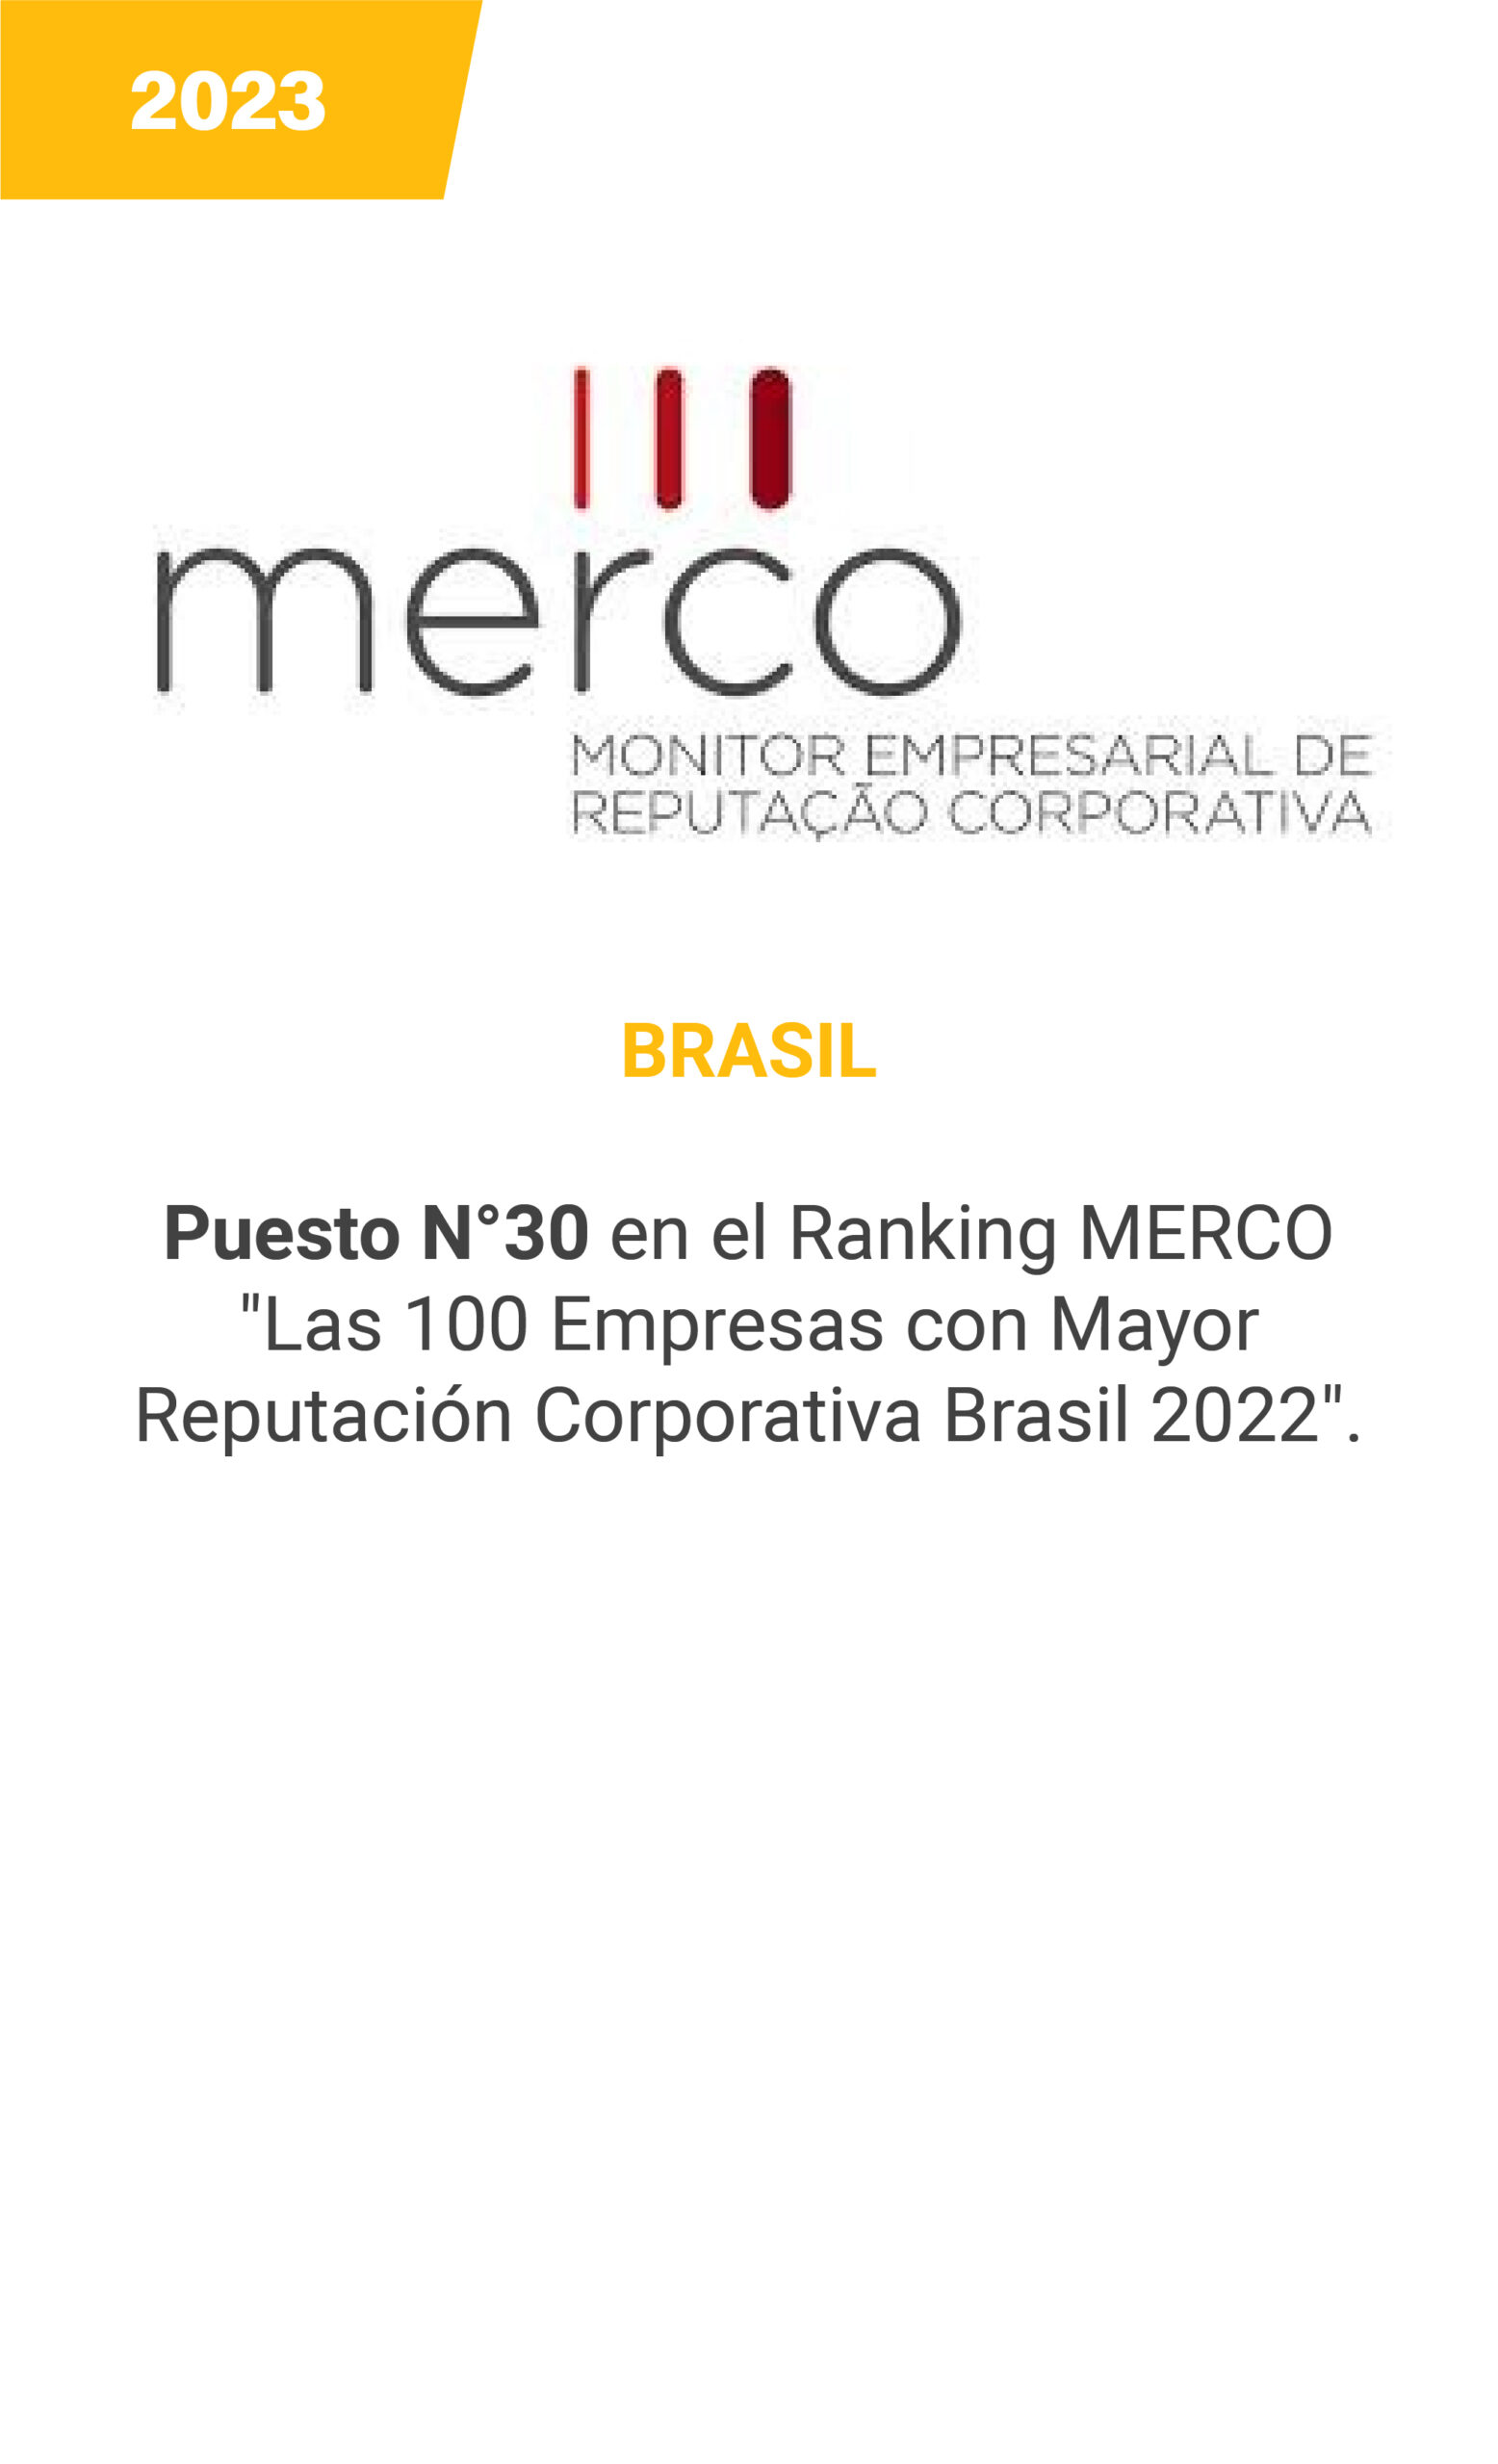 Merco - Brasil 2023 - mobile